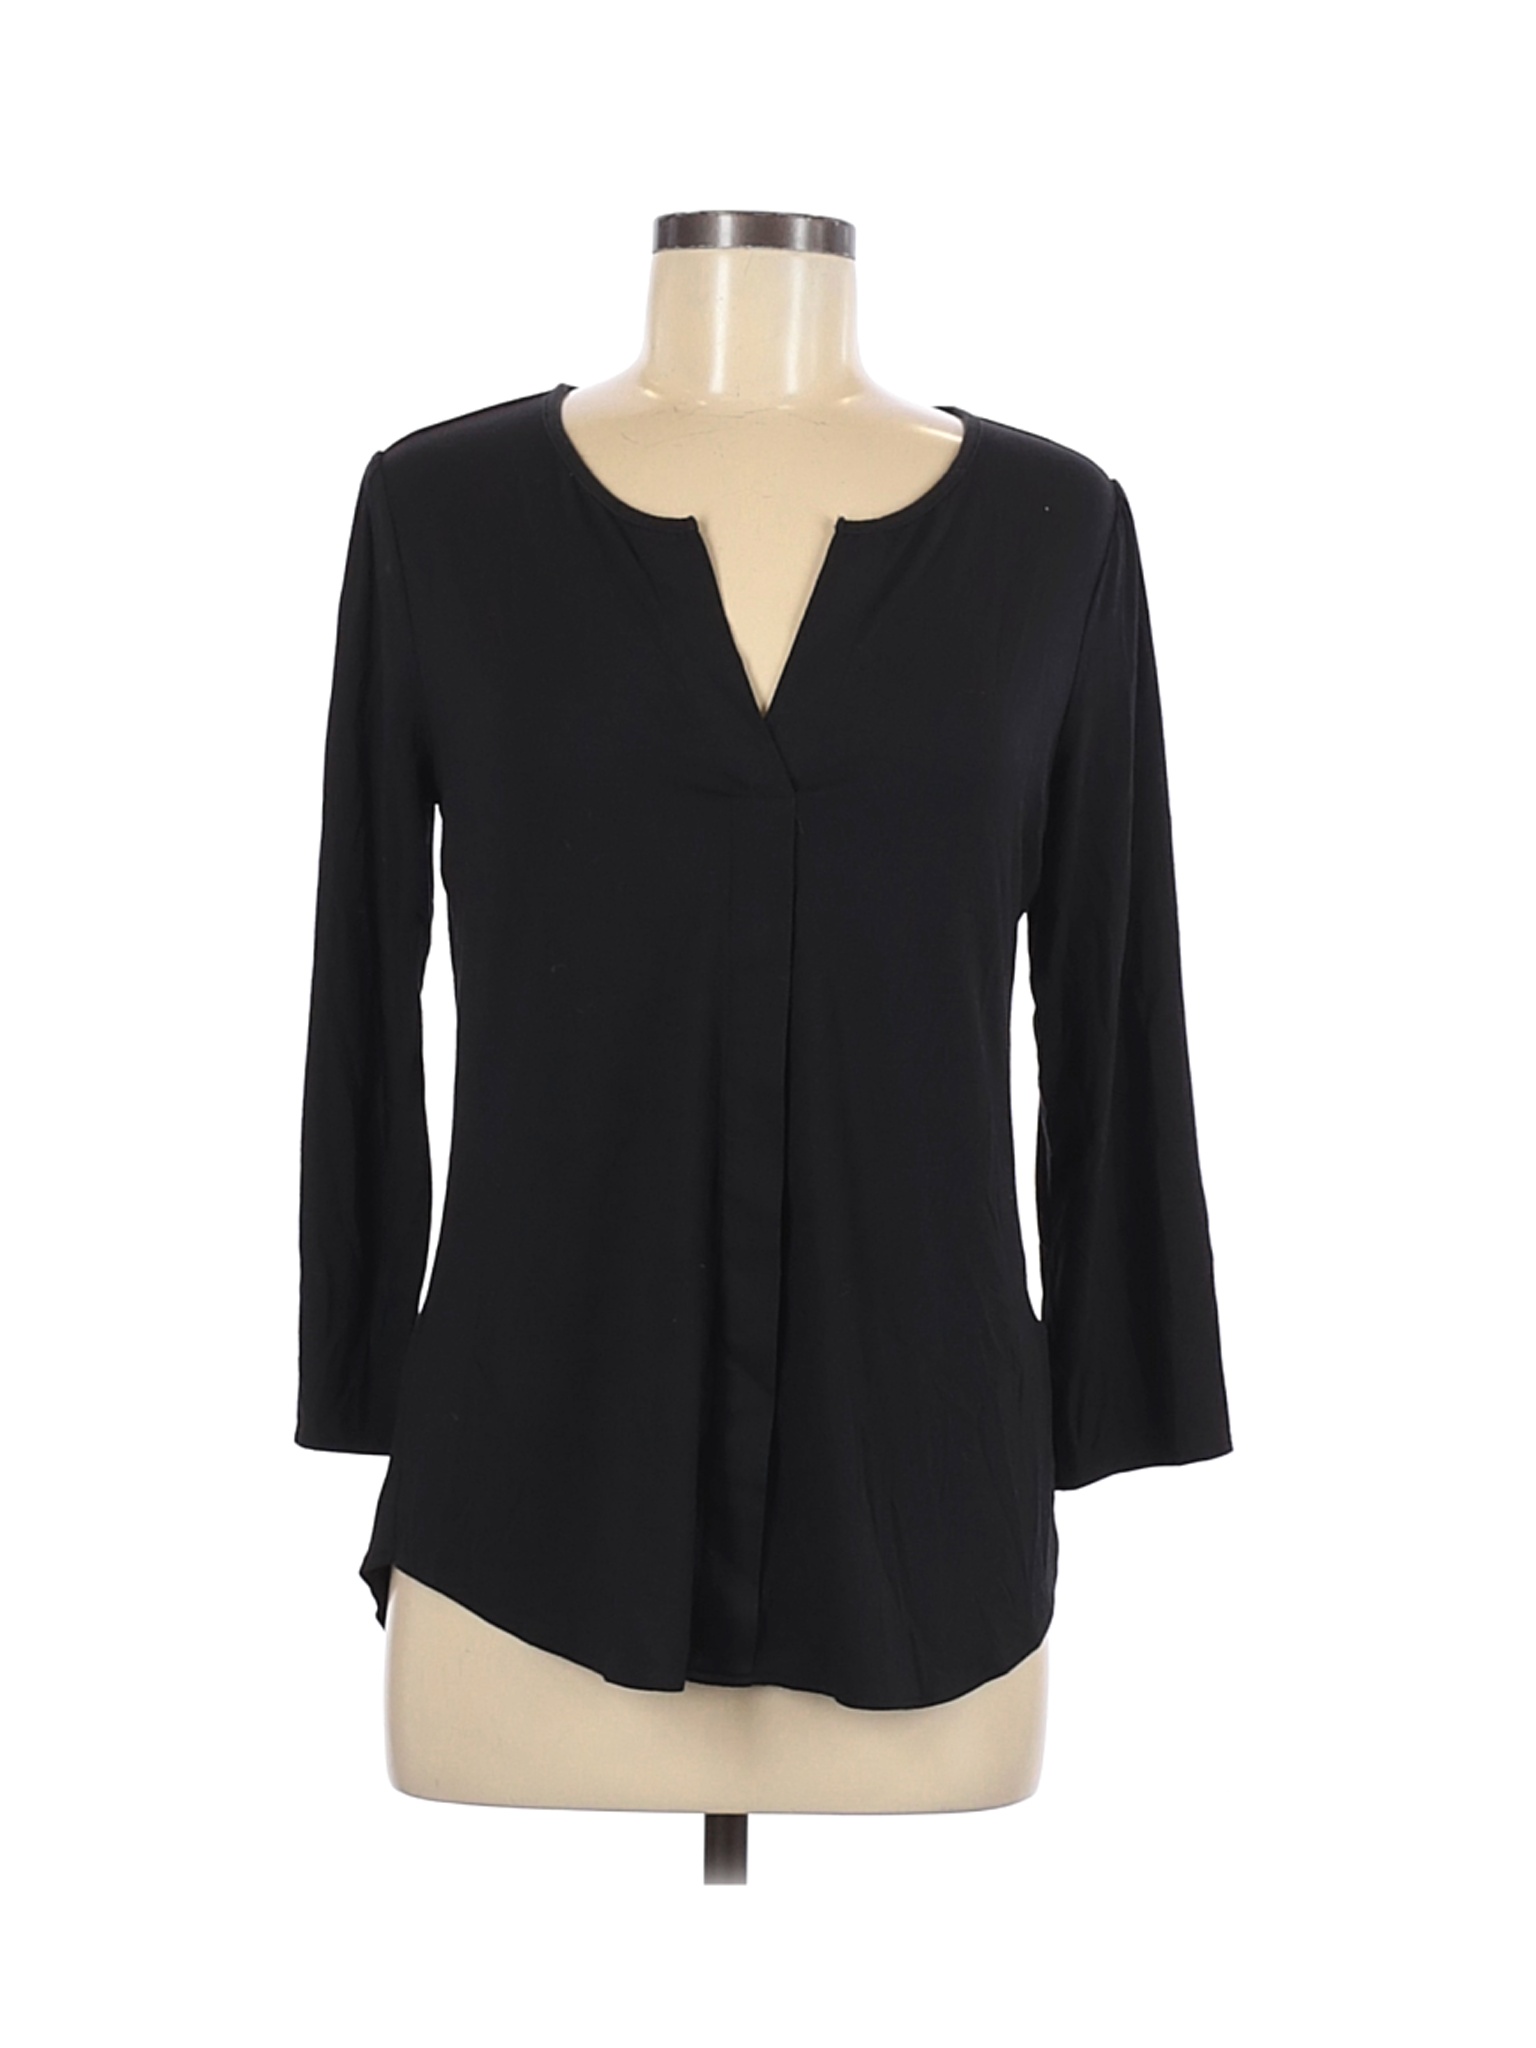 Gap Women Black Long Sleeve Top M | eBay